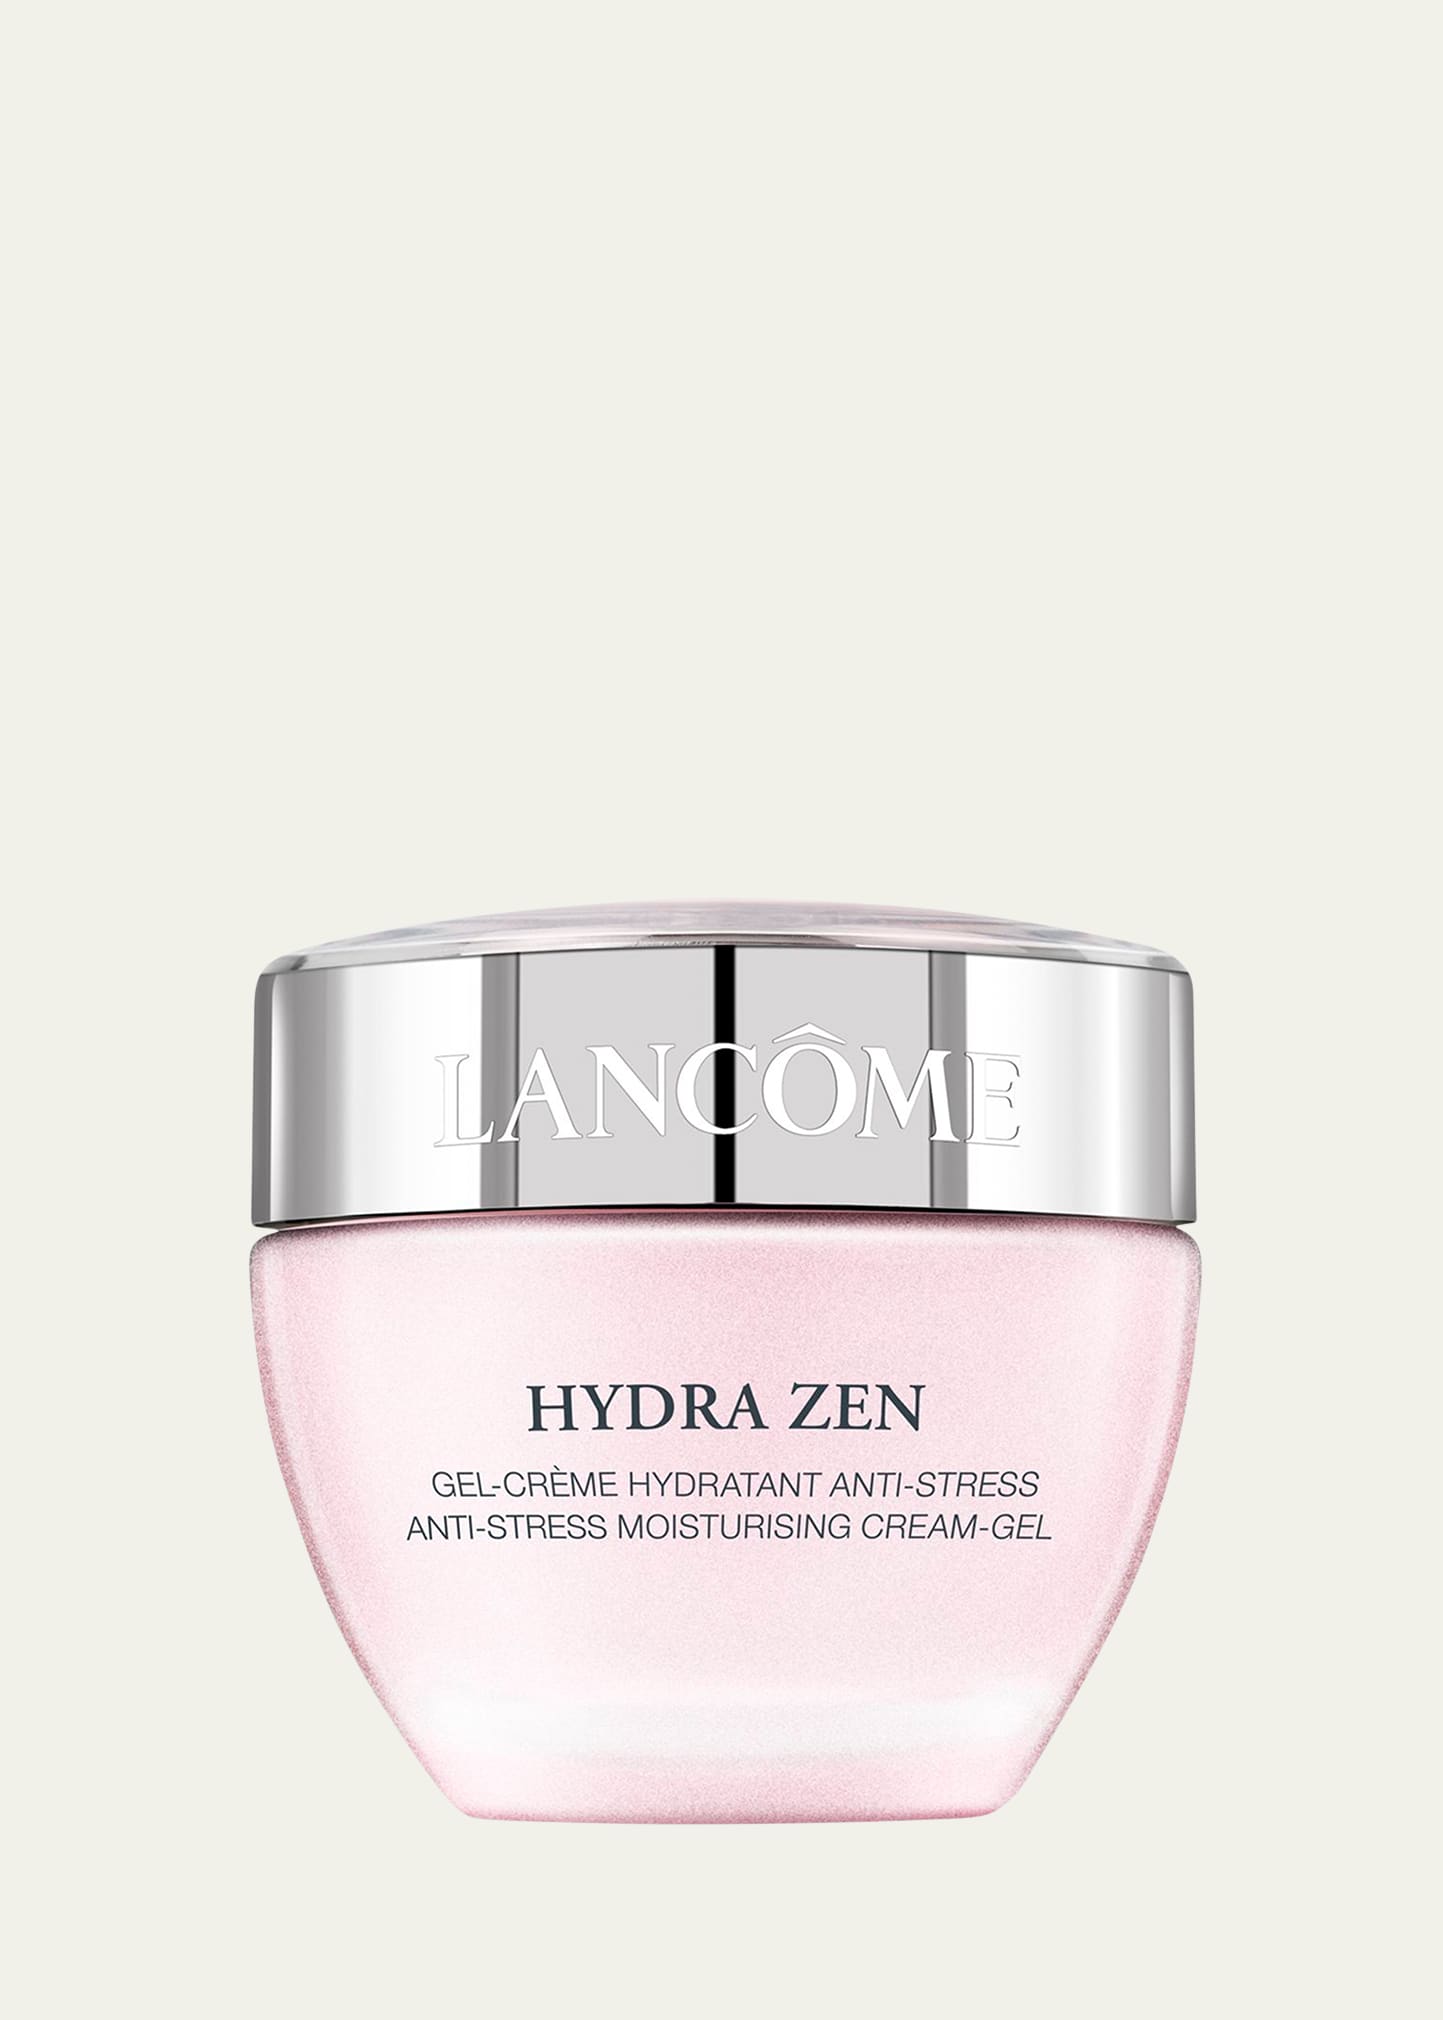 Hydra Zen Anti-Stress Moisturizing Gel Face Cream, 1.7 oz.